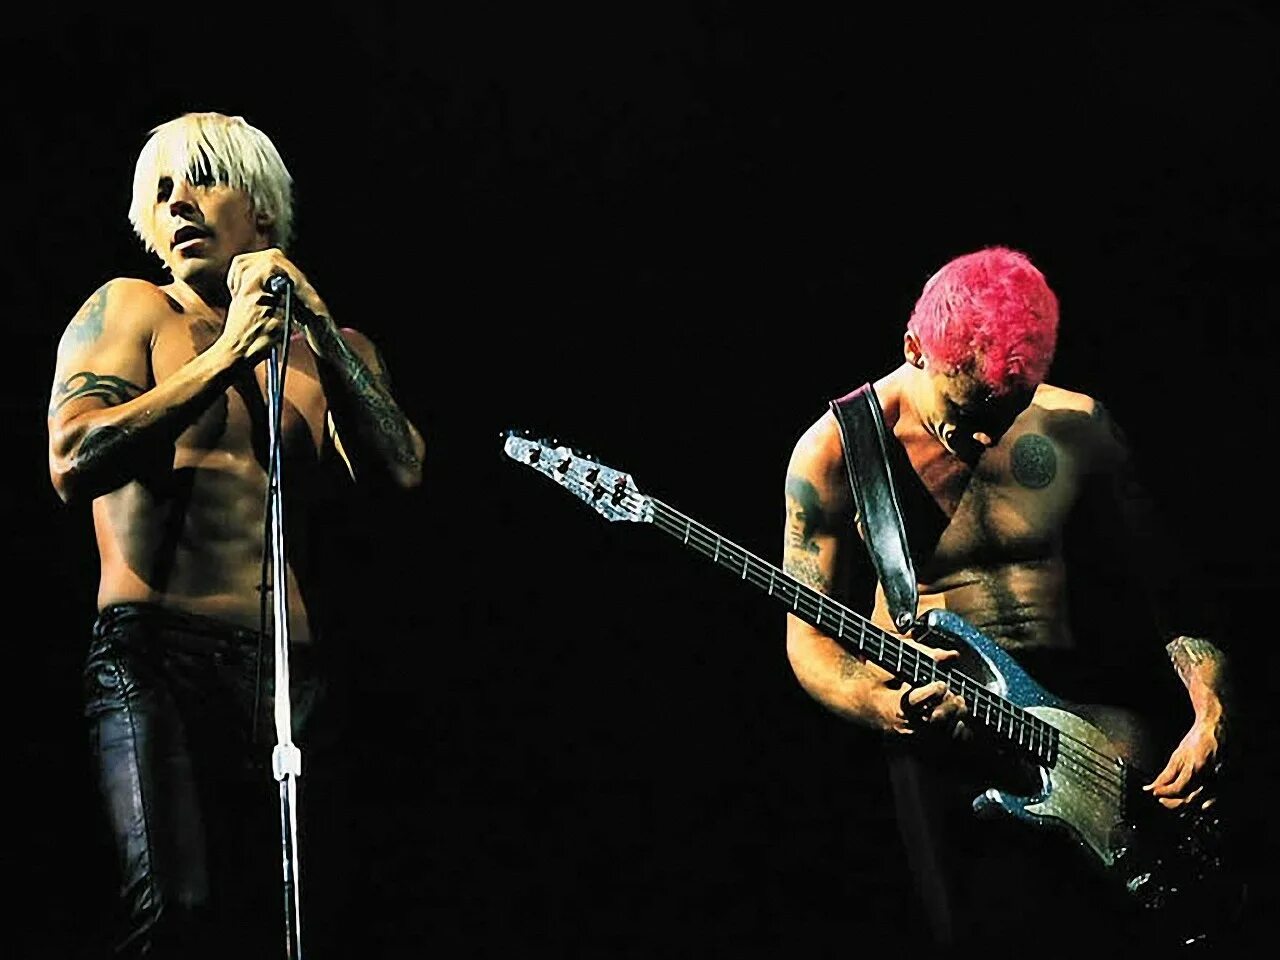 Over funk. Ред хот Чили пеперс. Басист ред хот Чили пеперс. Red hot Chili Peppers концерт. Флеа РХЧП розовые волосы.